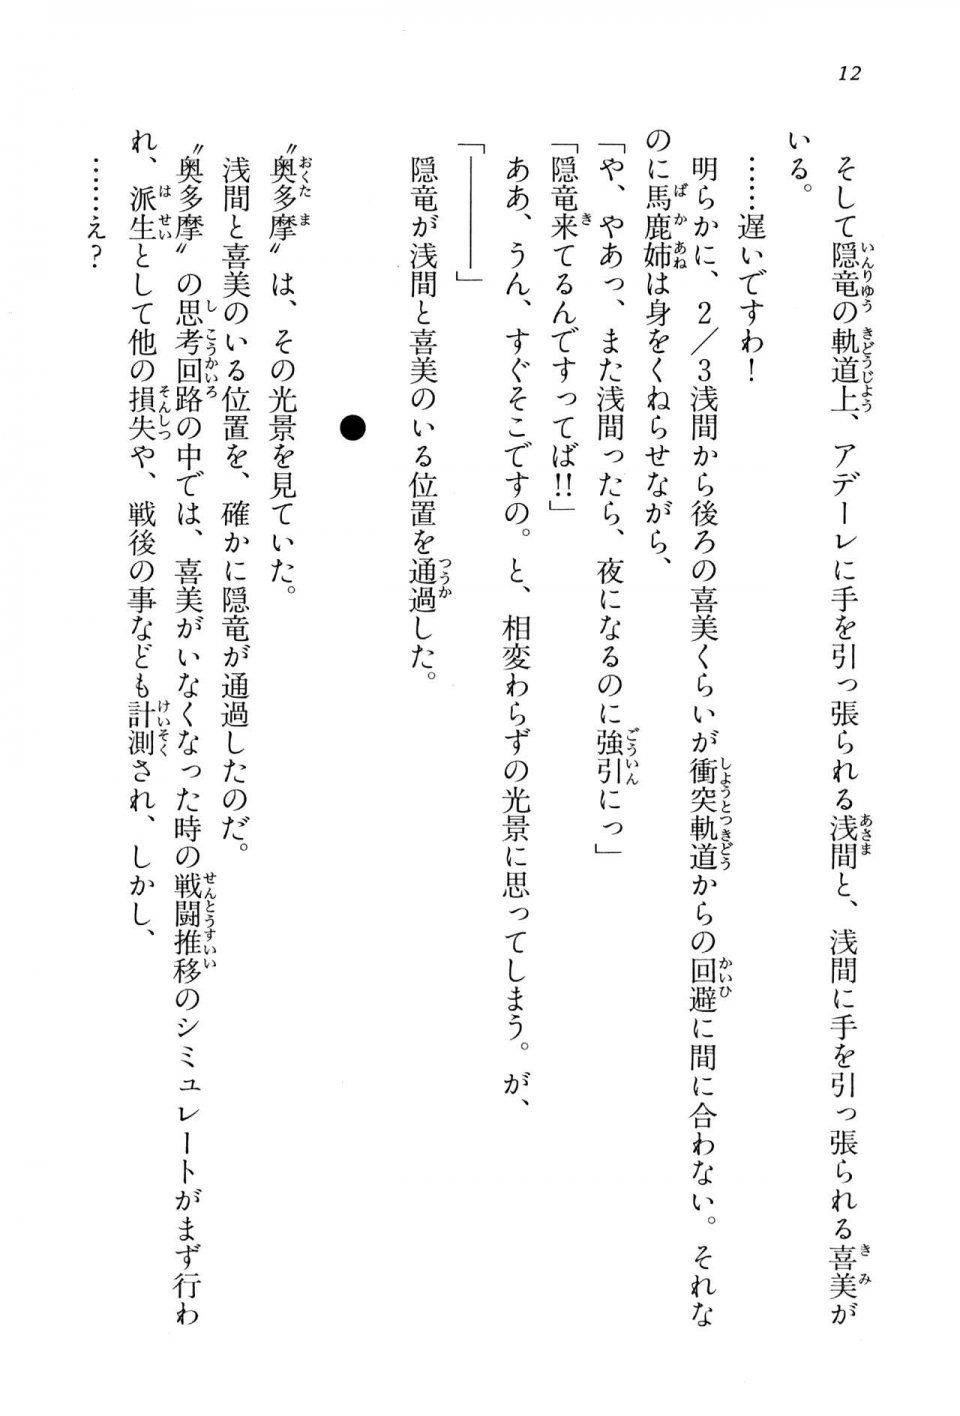 Kyoukai Senjou no Horizon BD Special Mininovel Vol 4(2B) - Photo #16